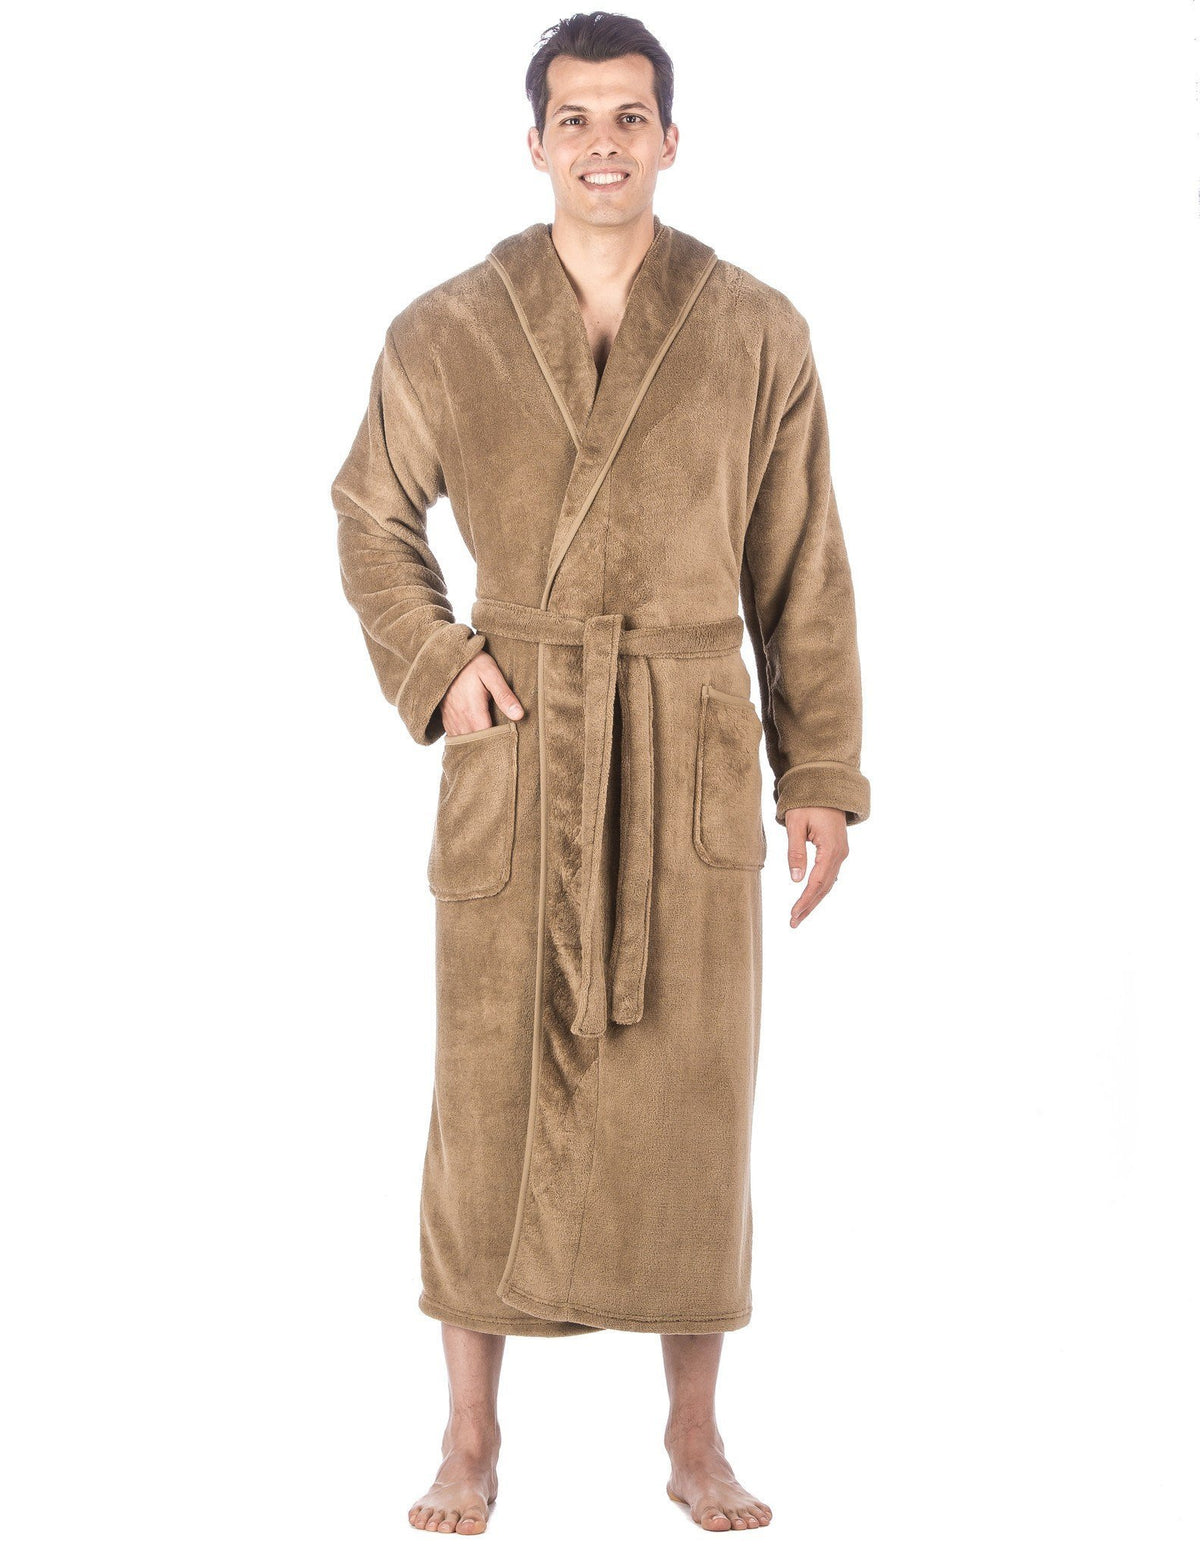 Men's Premium Coral Fleece Long Hooded Plush Spa/Bath Robe - Capuccino